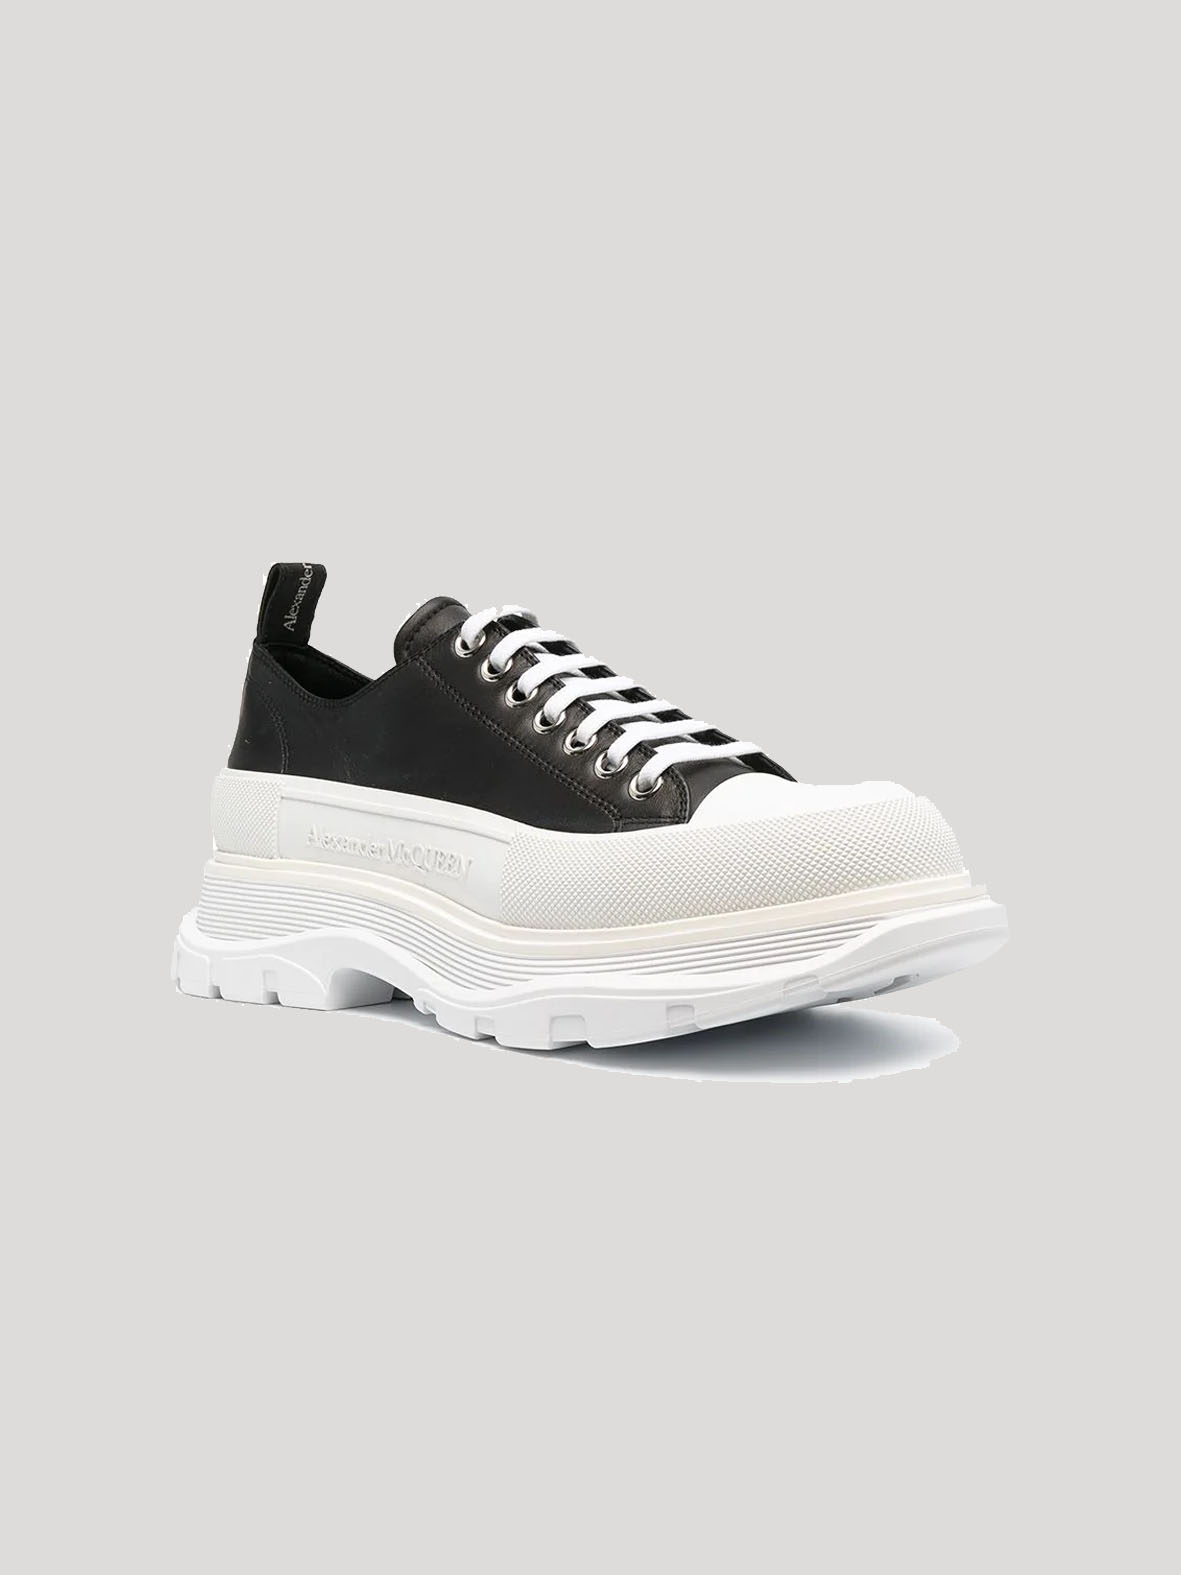 Alexander Mcqueen Hybrid Leather Sneaker - Kicks Galeria